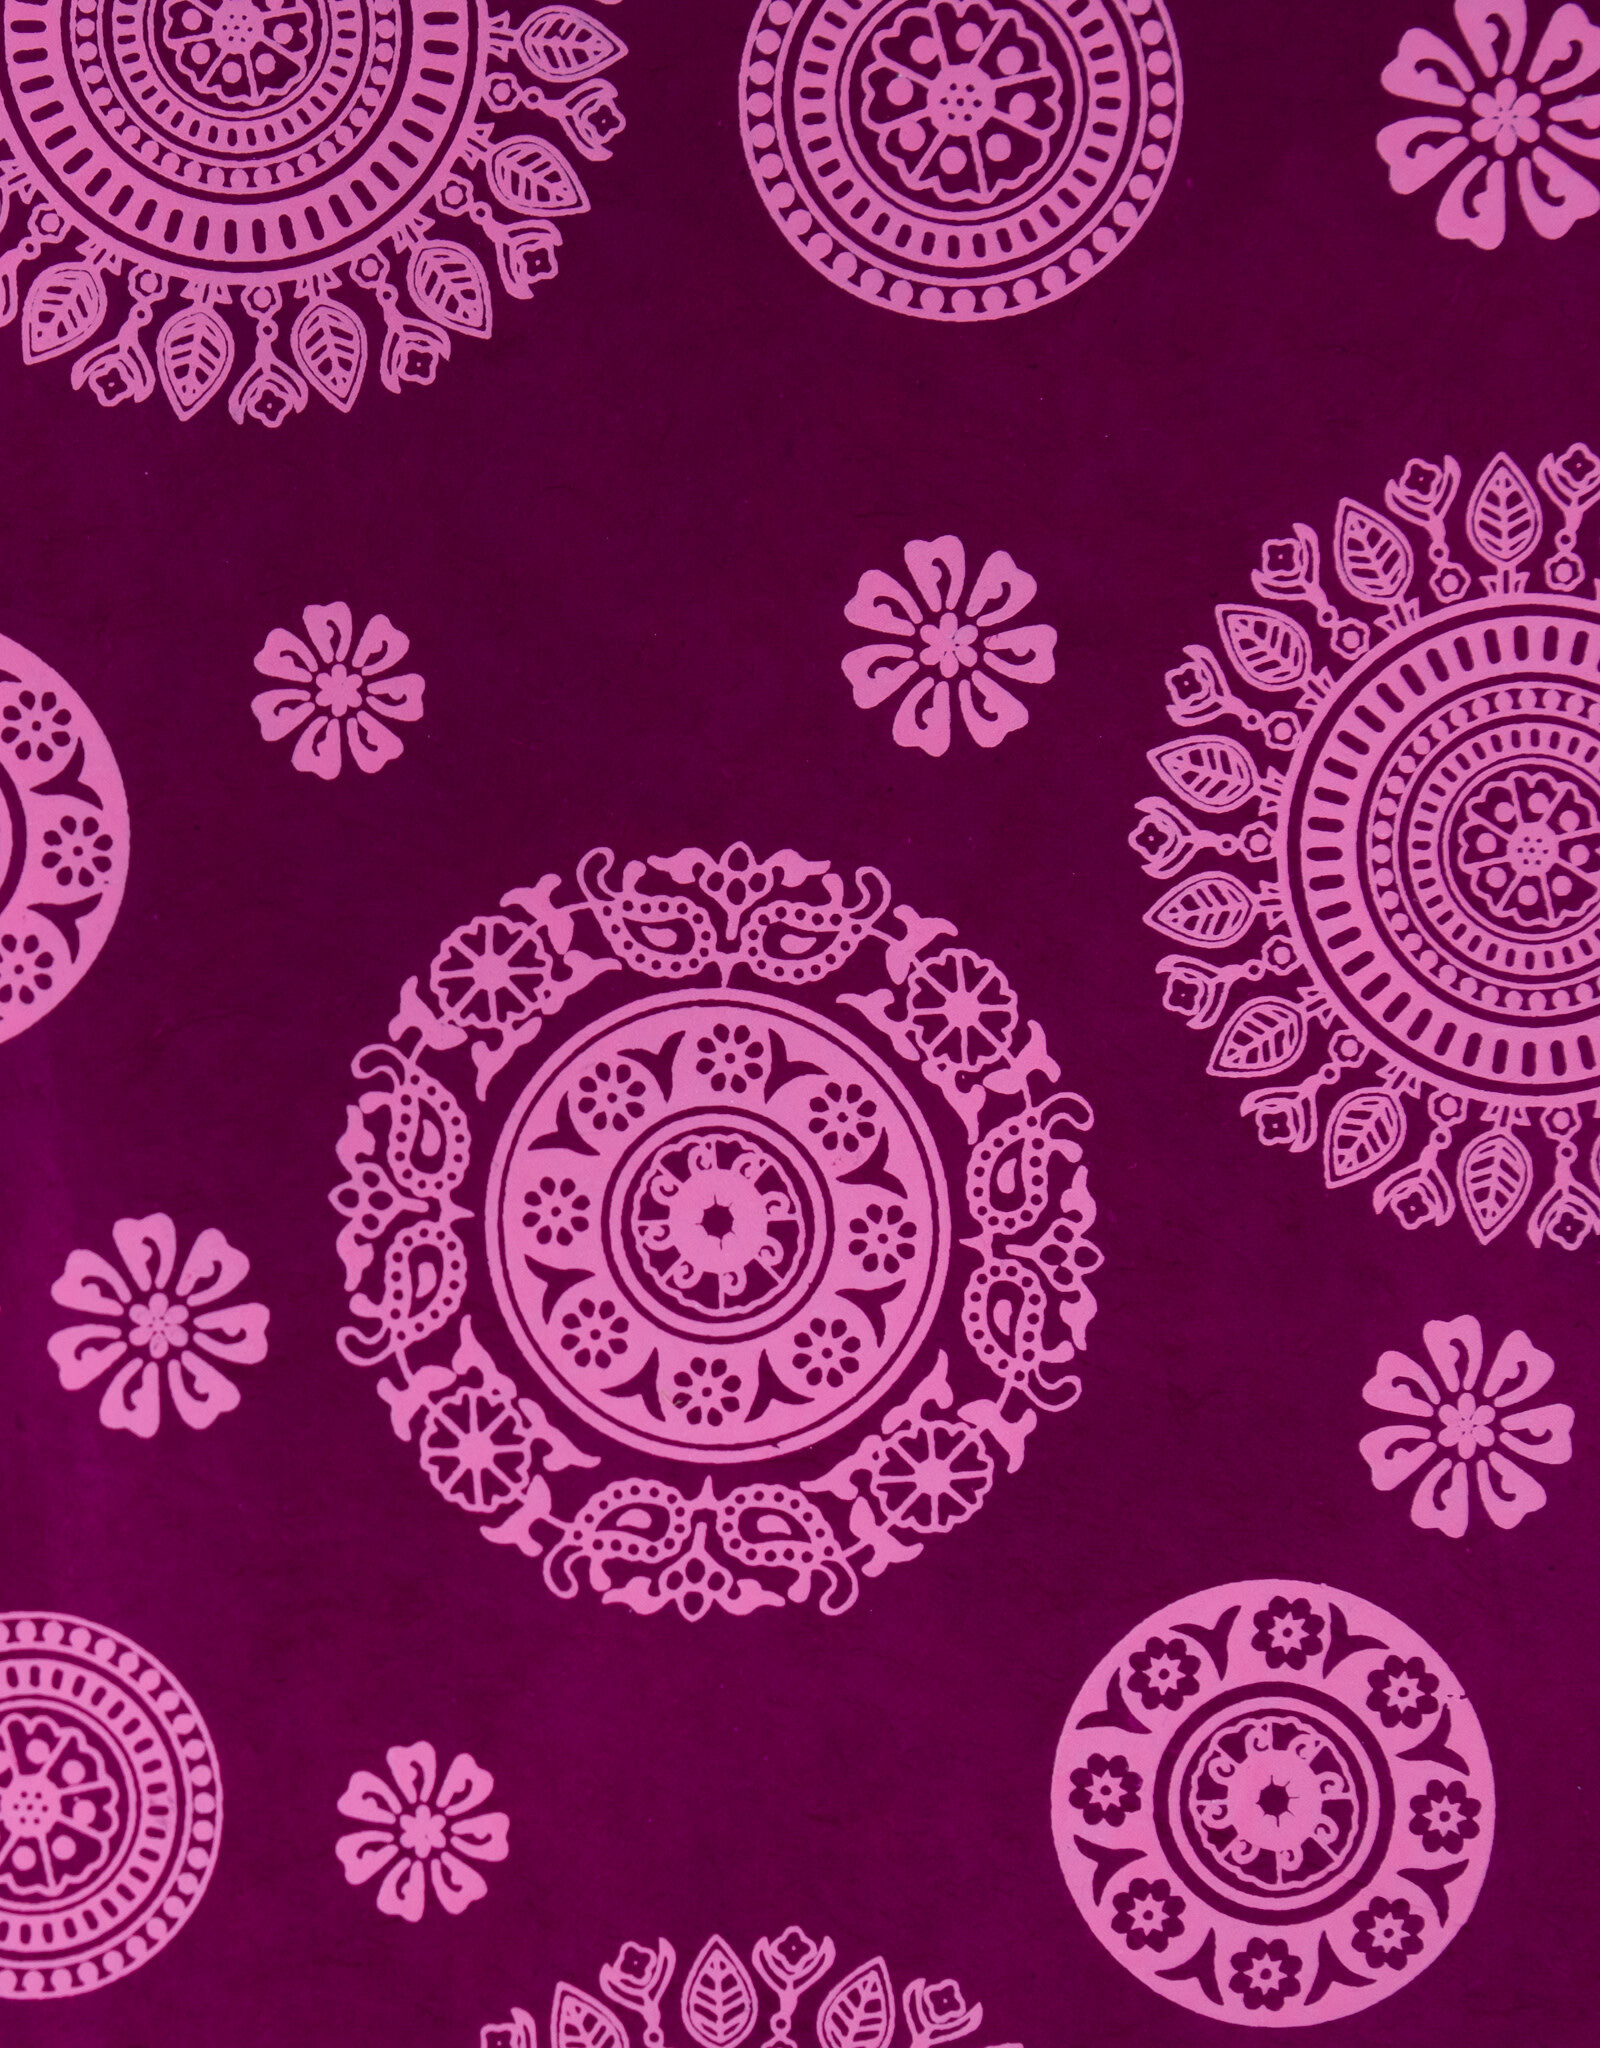 AITOH Aitoh Lokta Printed Mandala Pink on Maroon 19.5" x 29.5"